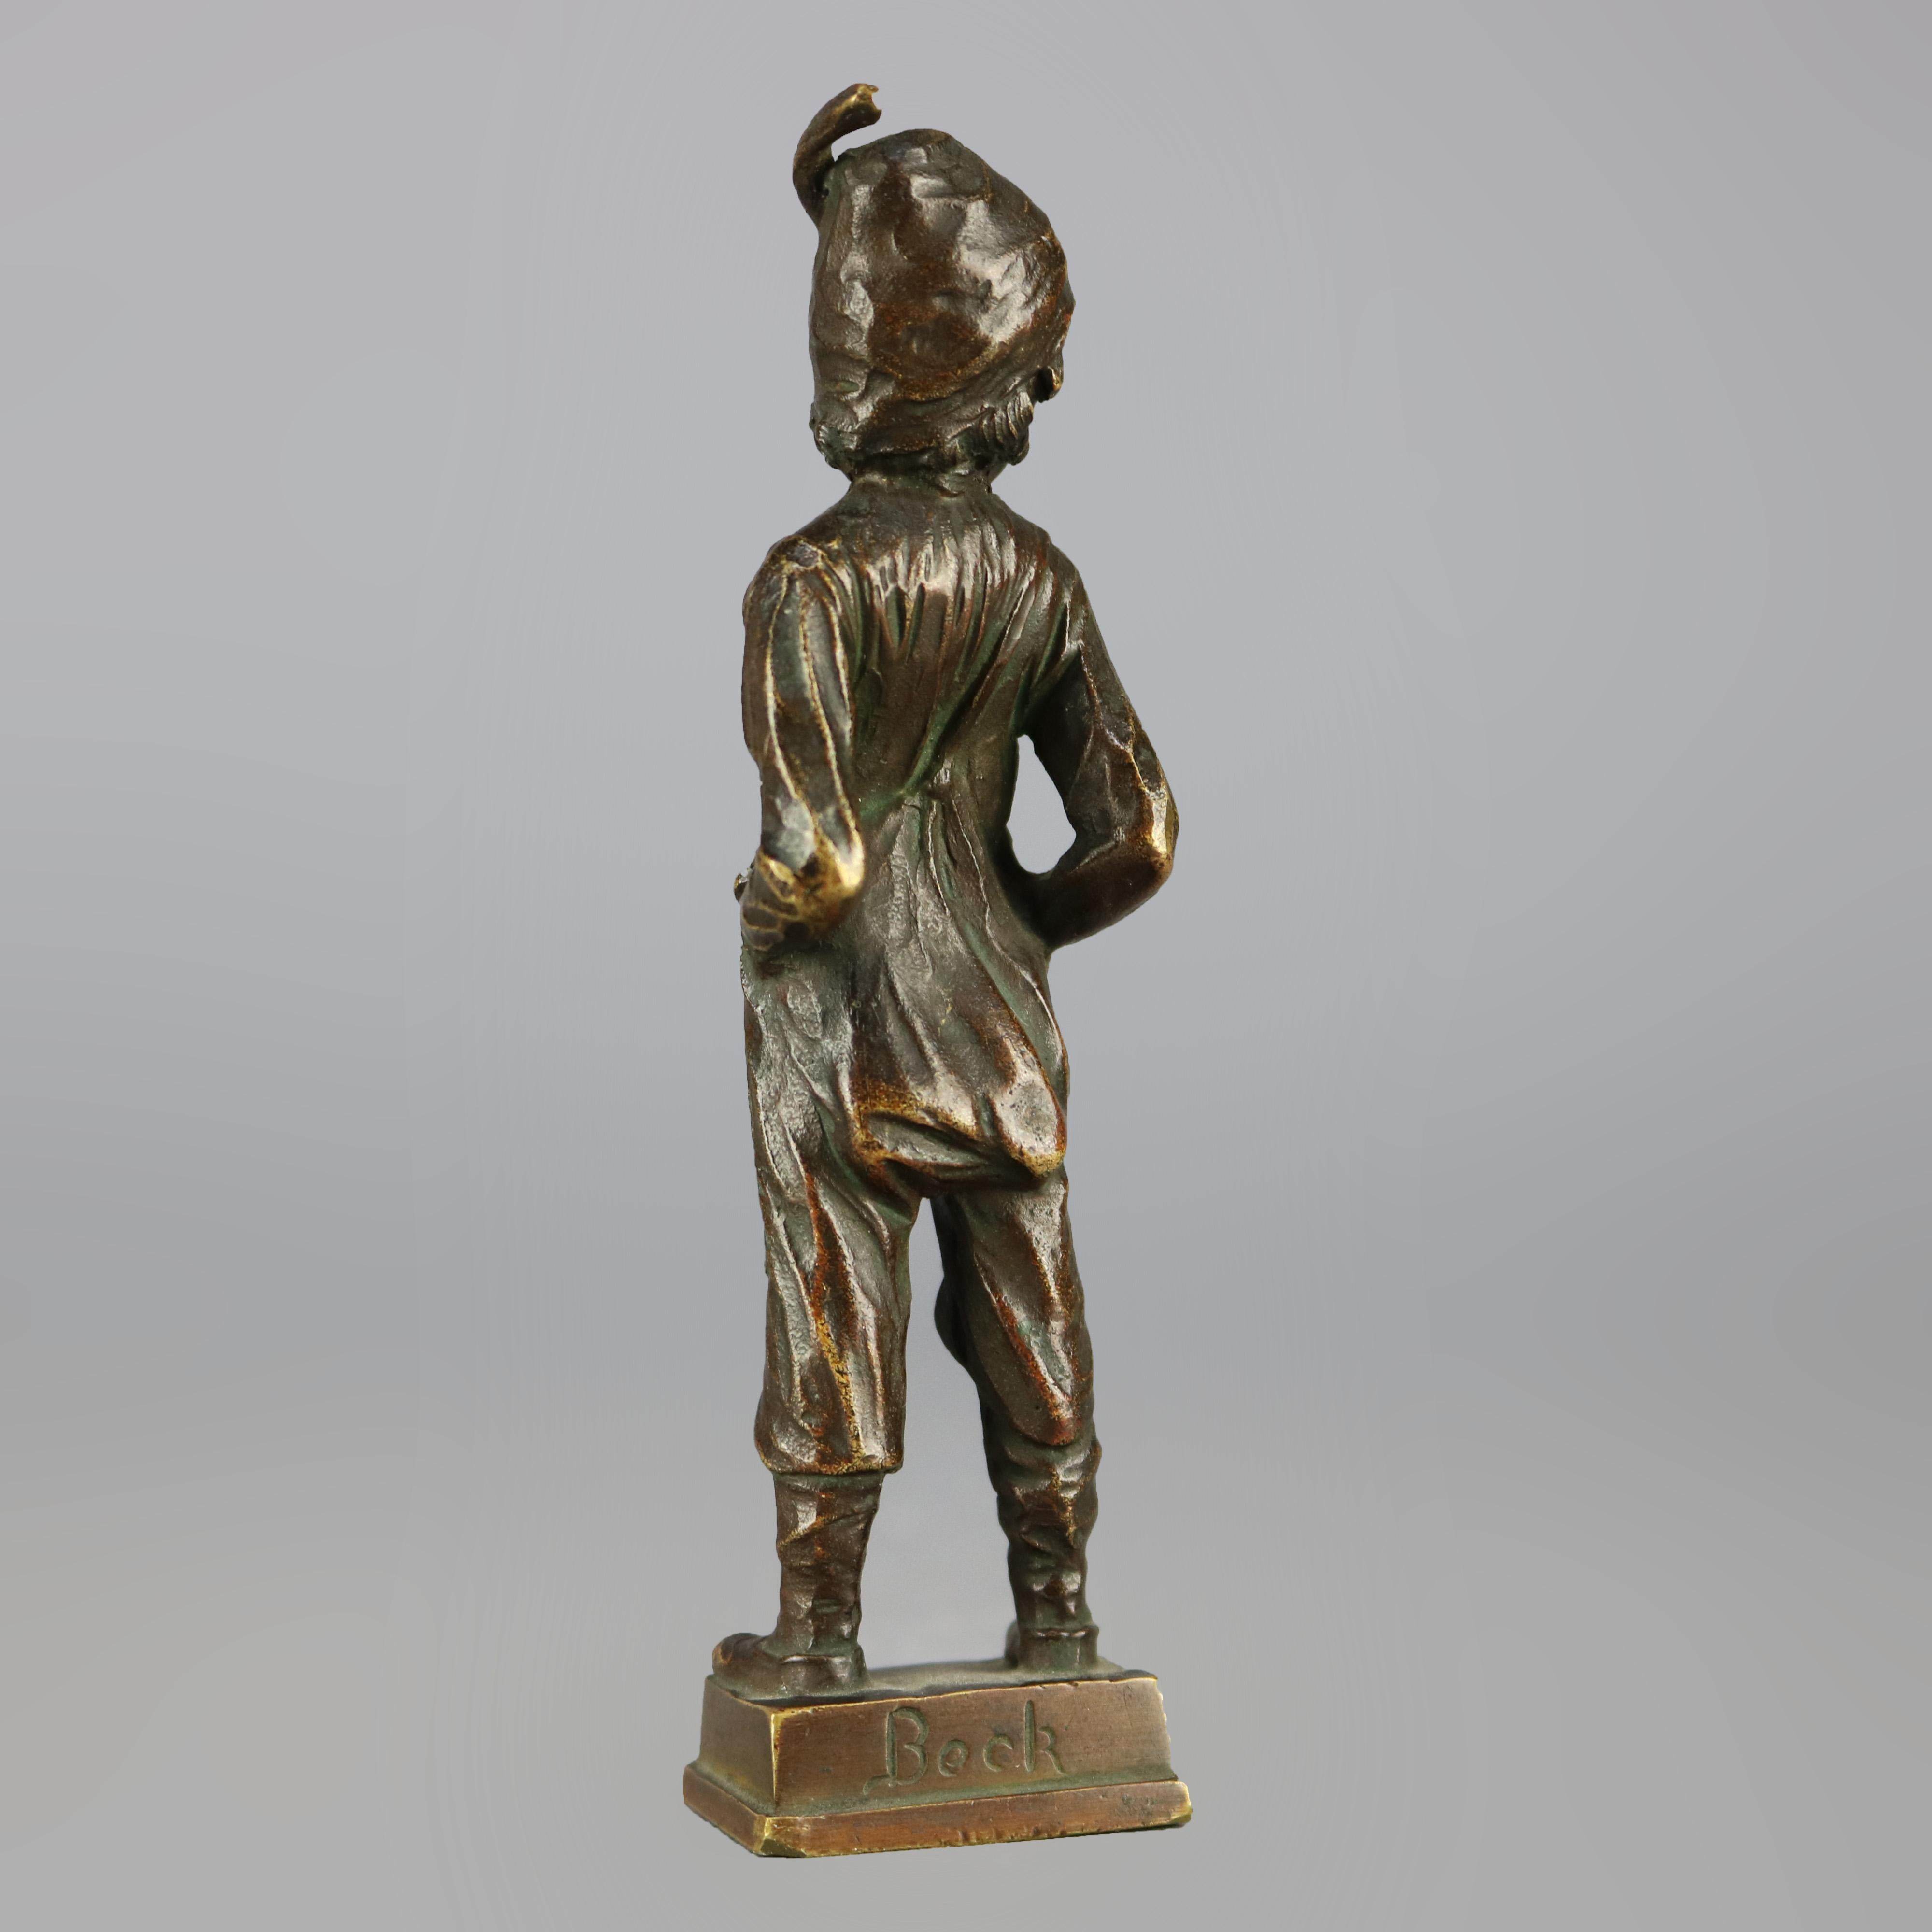 European Antique Continental Figural Bronze Cabinet Sculpture of Boy, Signed Beck